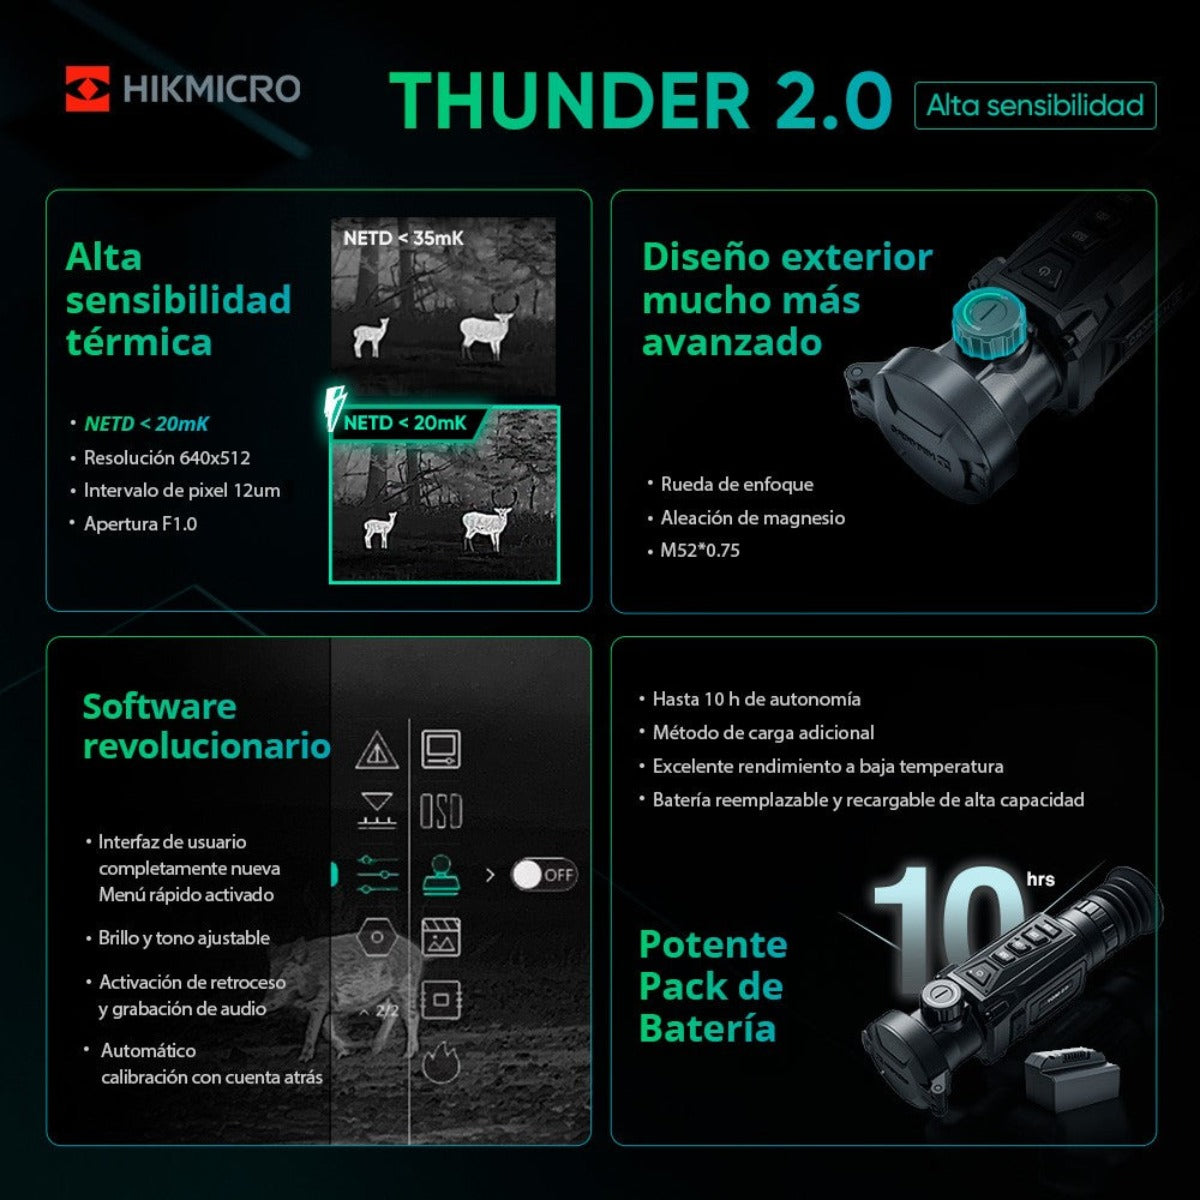 Visor Térmico Hikmicro Thunder TH35P 2.0